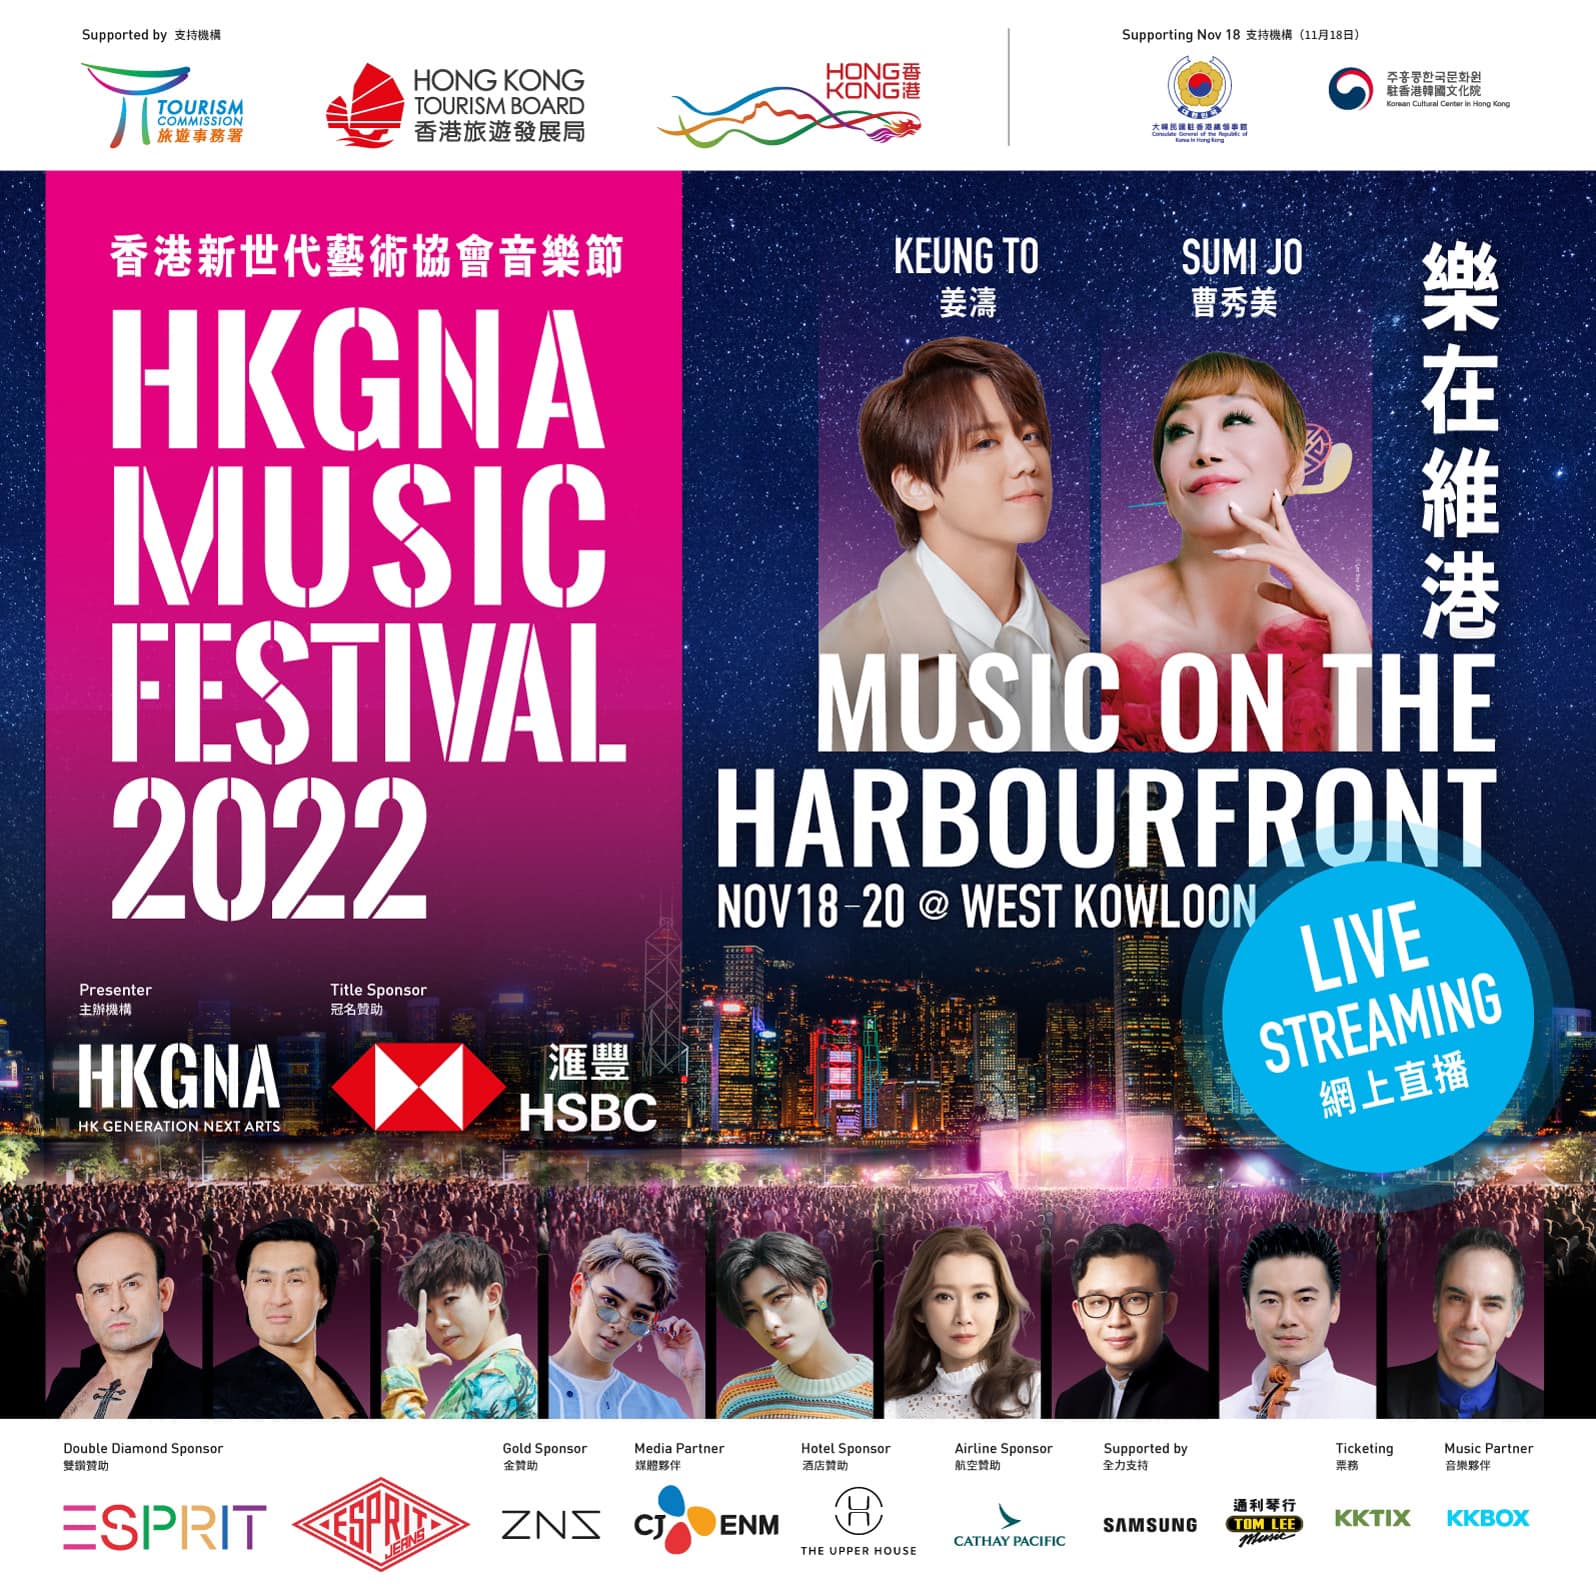 FaceBook@Hong Kong Generation Next Arts - HKGNA